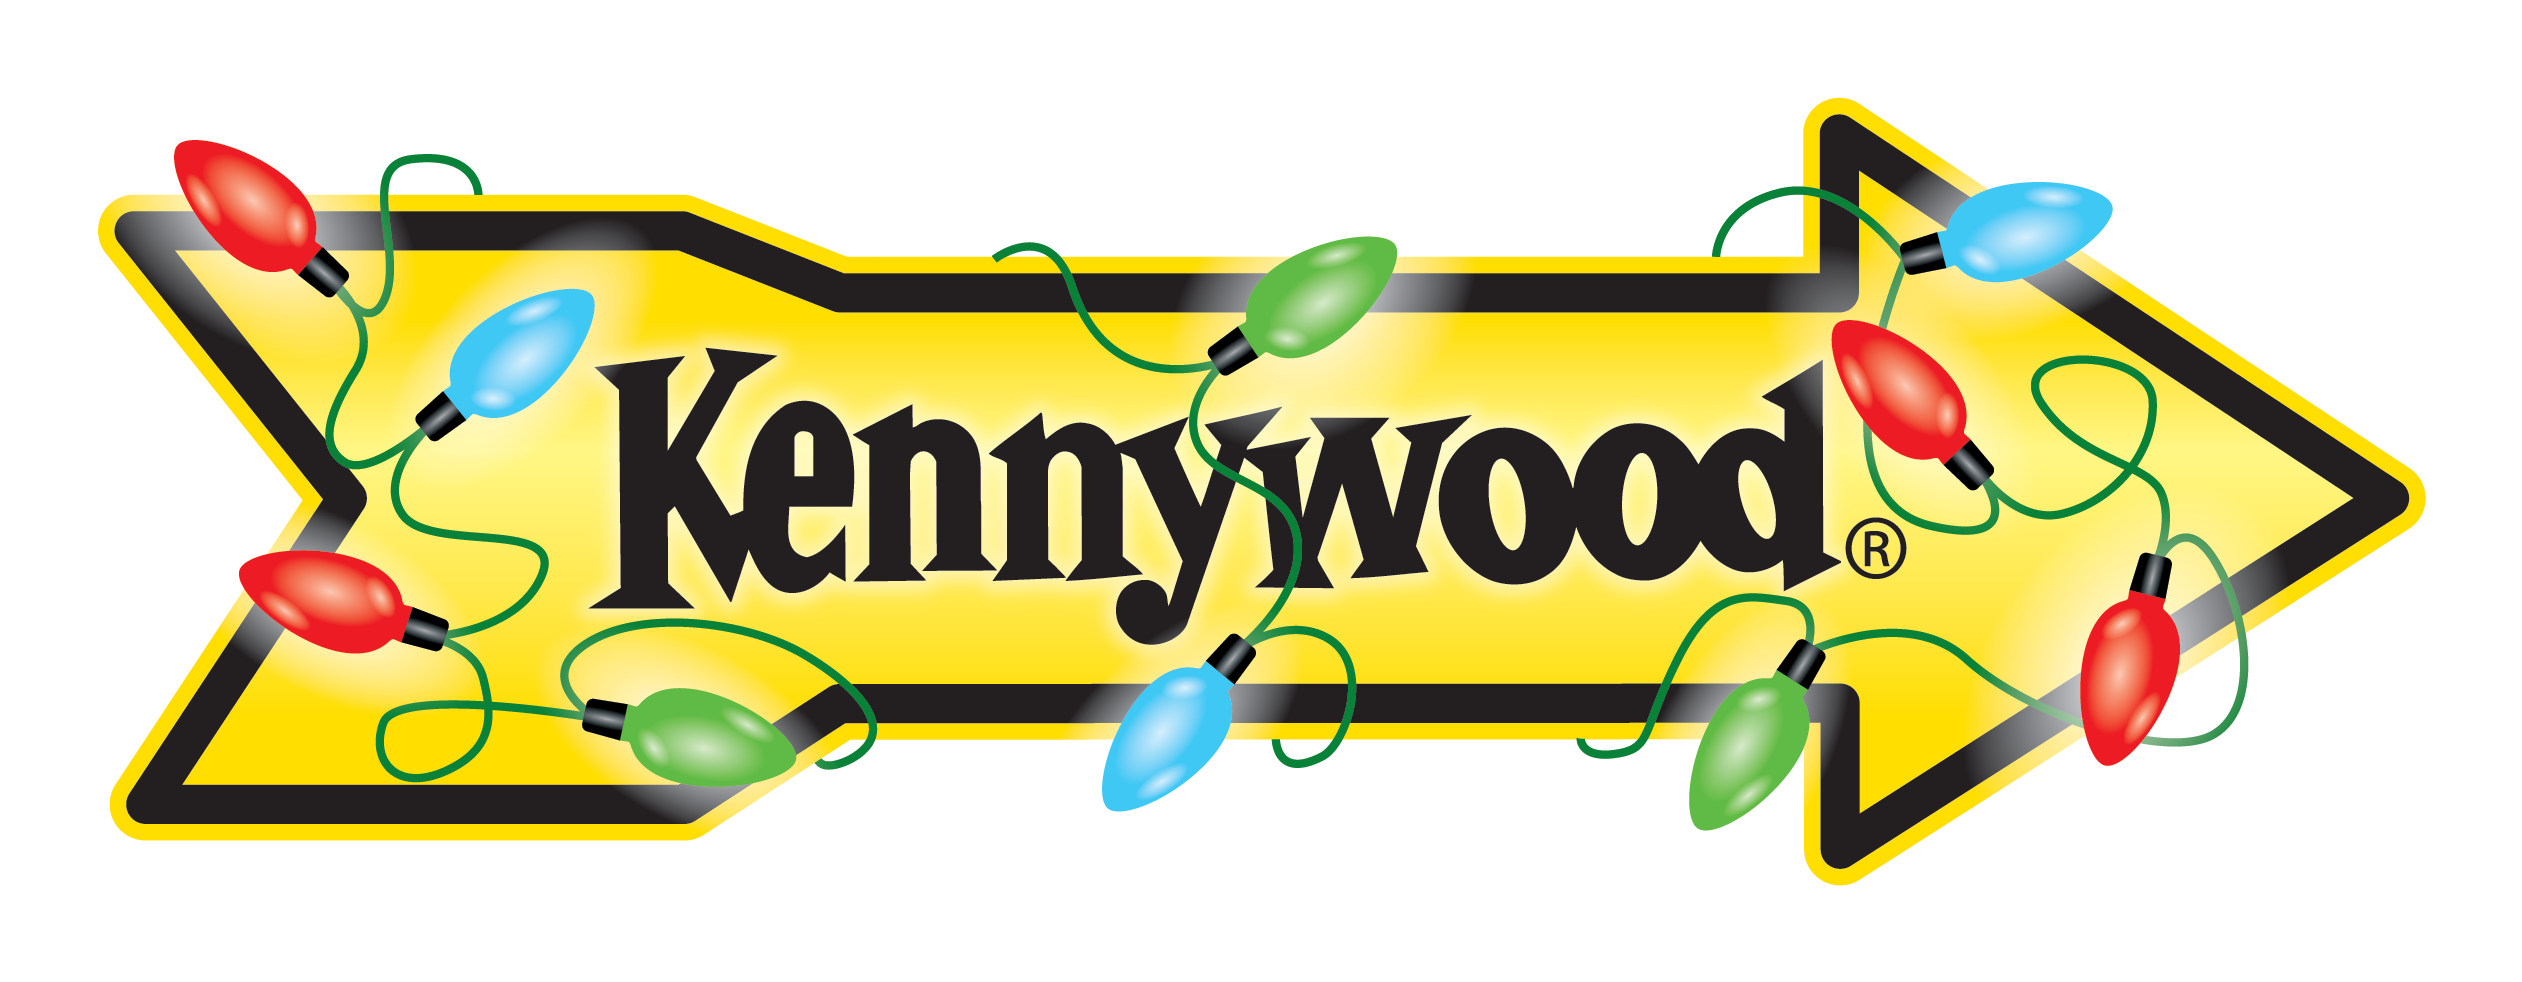 Kennywood Invites The Community To Gather, Celebrate - Kennywood Invites The Community To Gather, Celebrate (2715x1170)